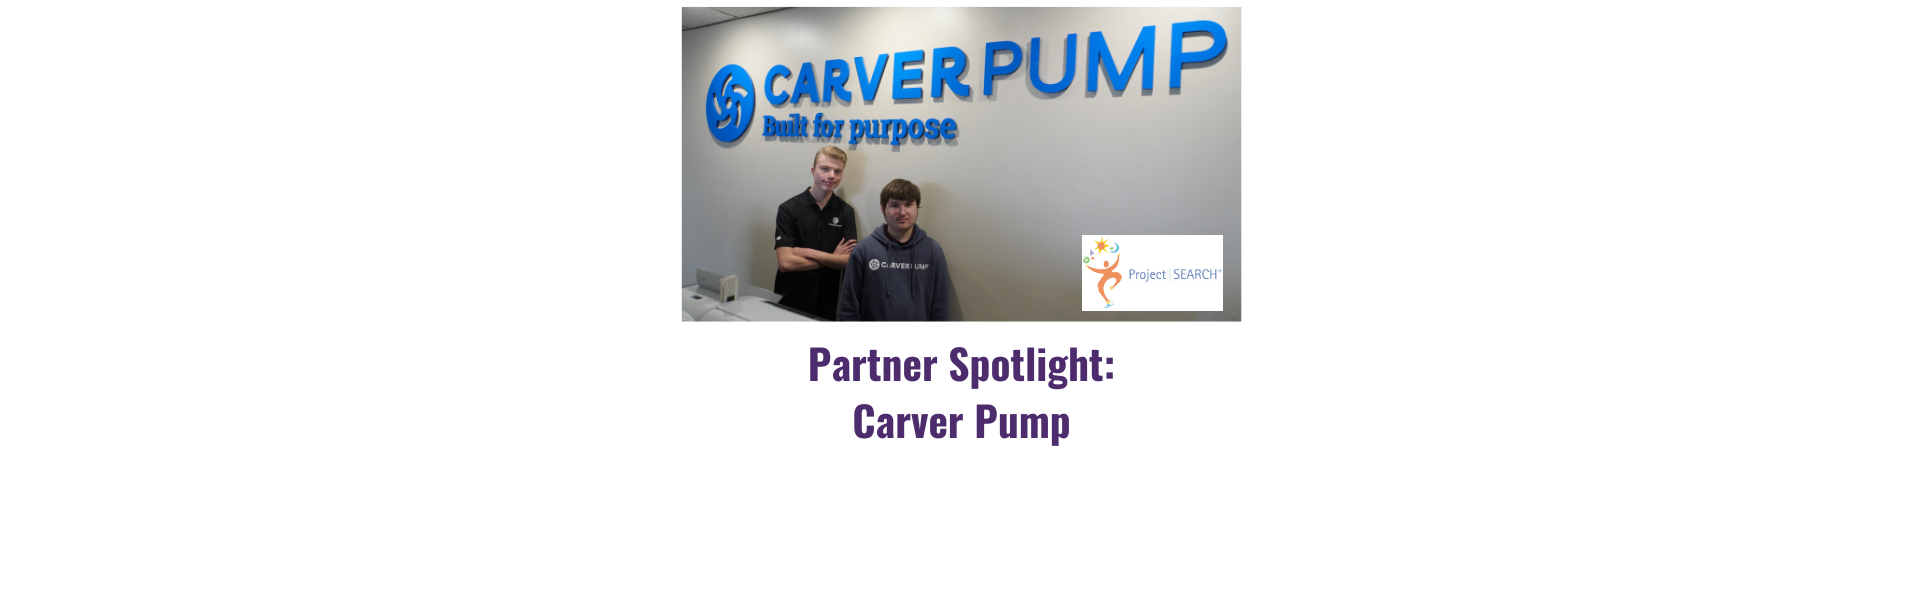 Project SEARCH Partner Spotlight: Carver Pump!